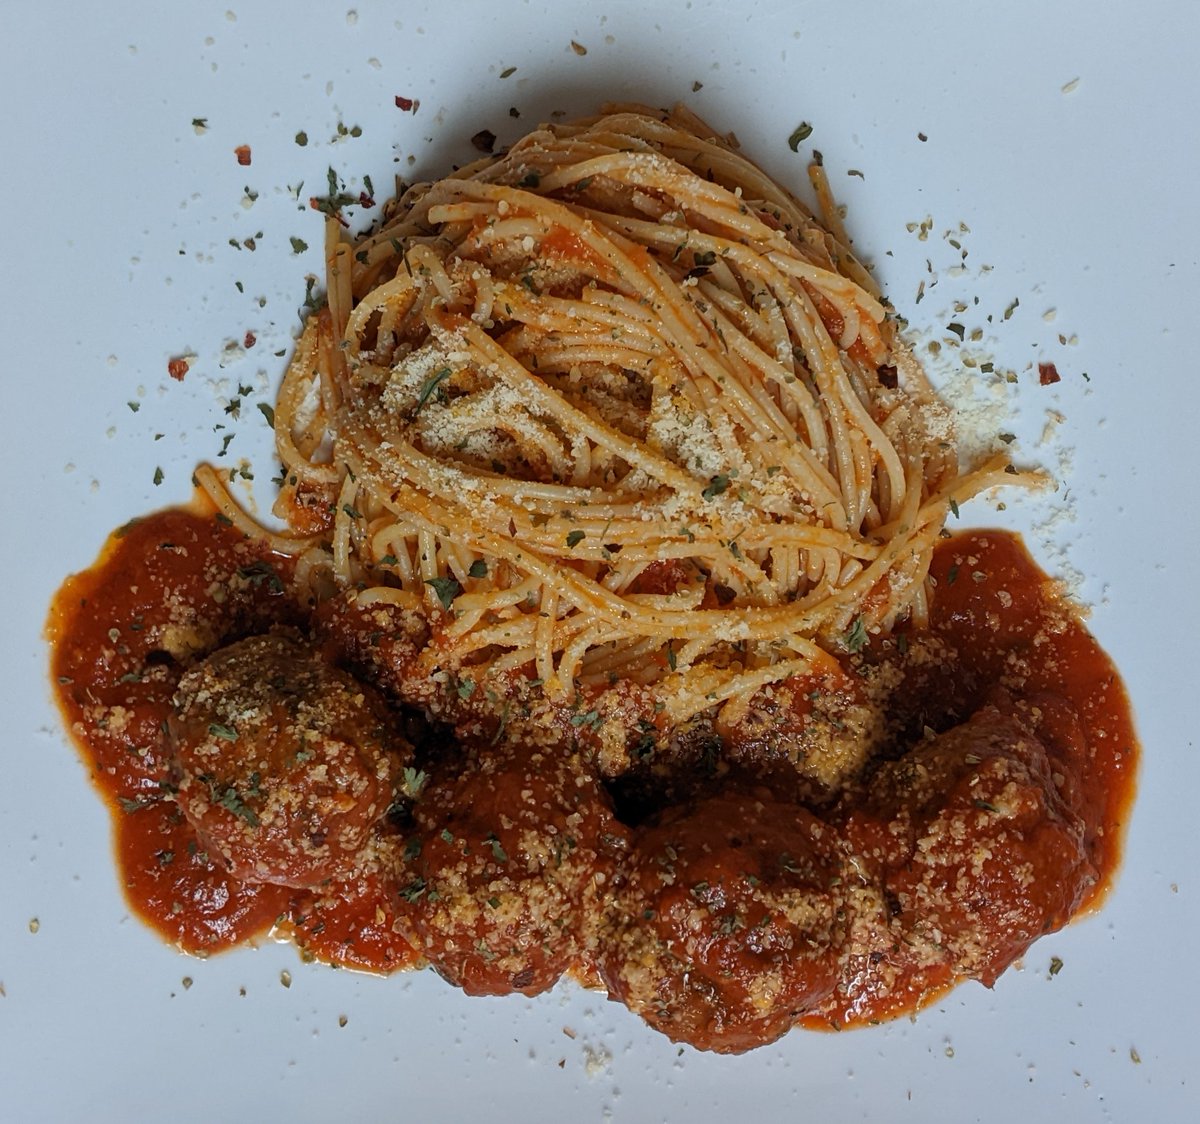 Spaghetti & Meatballs

#allkindsofrecipes #testkitchen #spaghettiandmeatballs #spaghetti #meatballs #pasta #marinarasauce